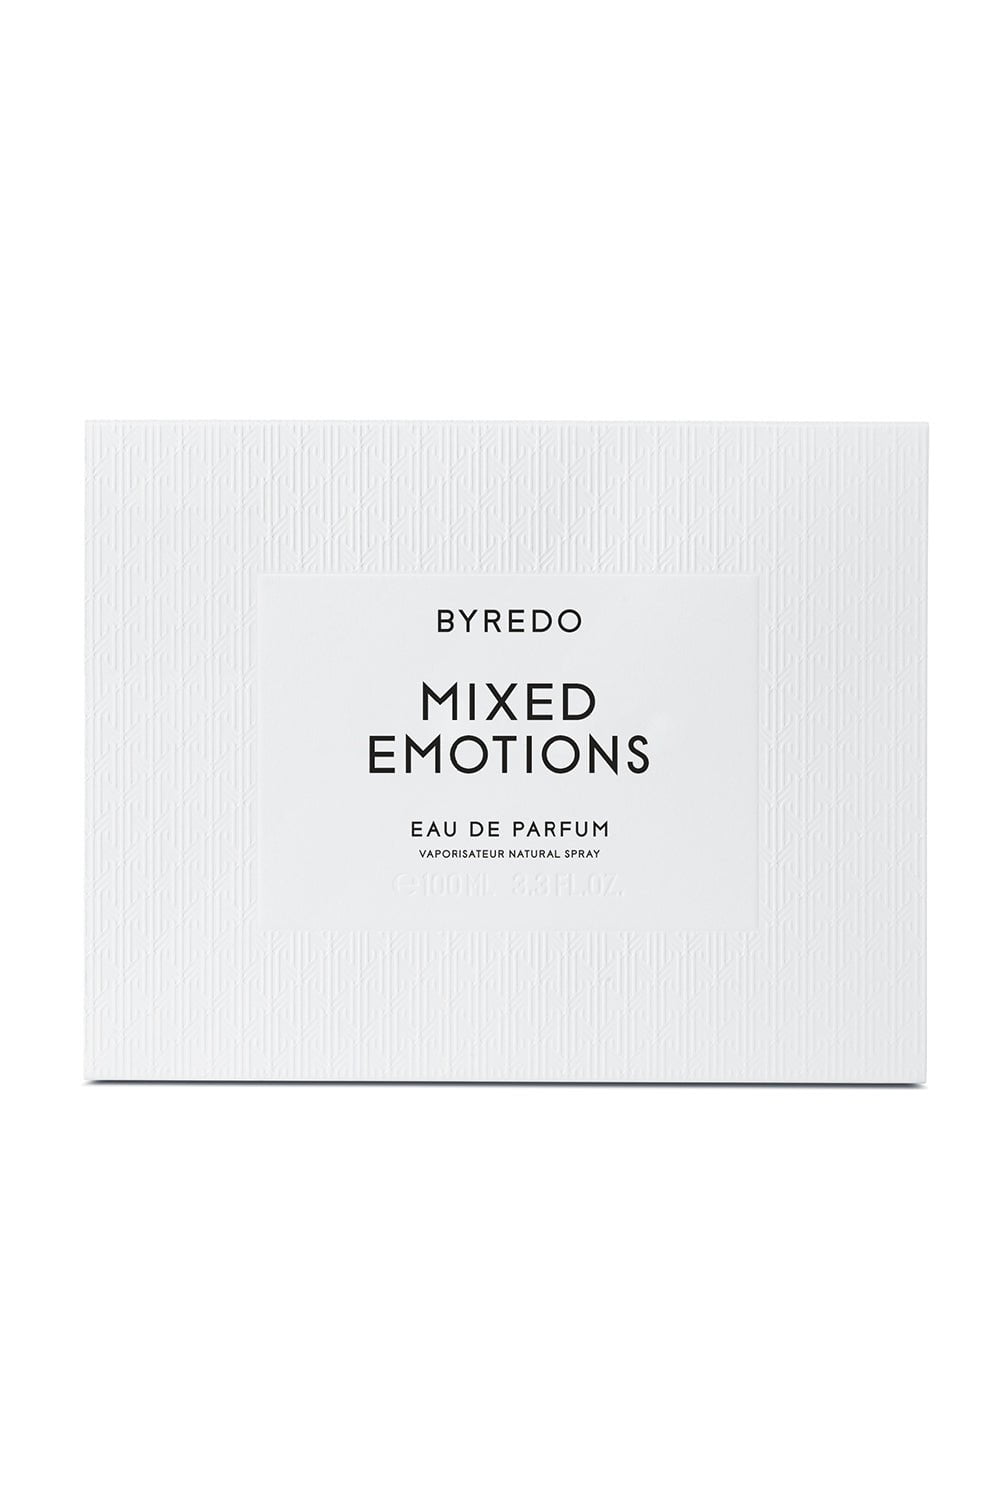 Mixed Emotions - 50ml BEAUTYFRAGRAN BYREDO   